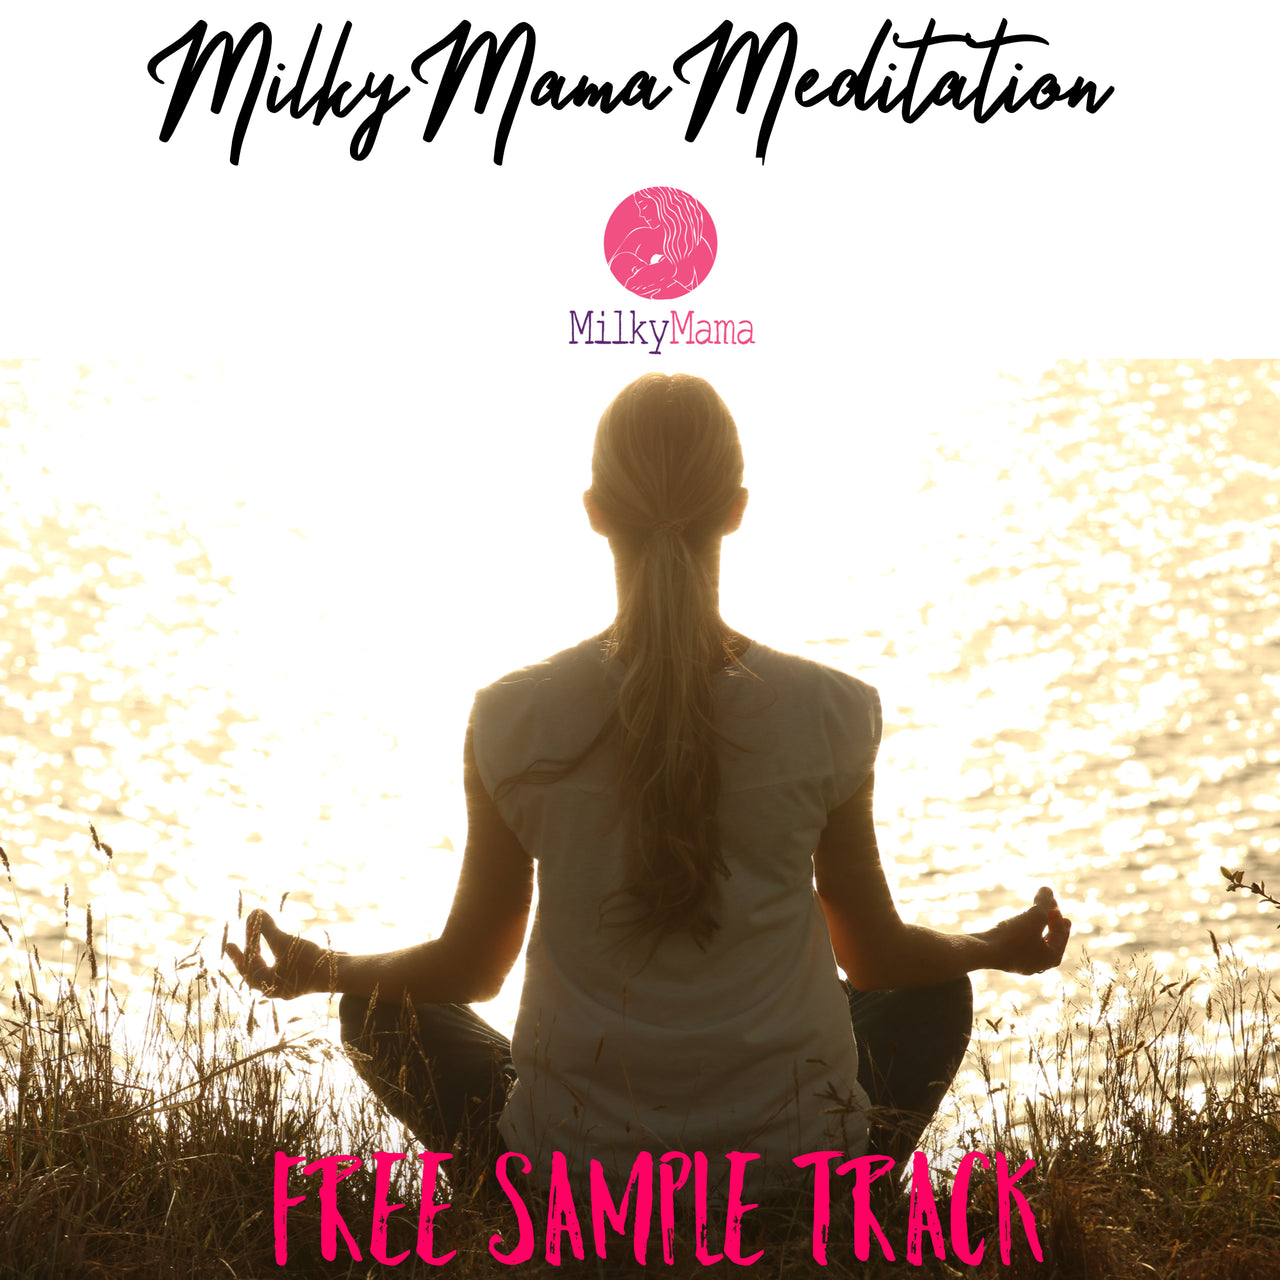 Milky Mama Meditation - Free Sample Track